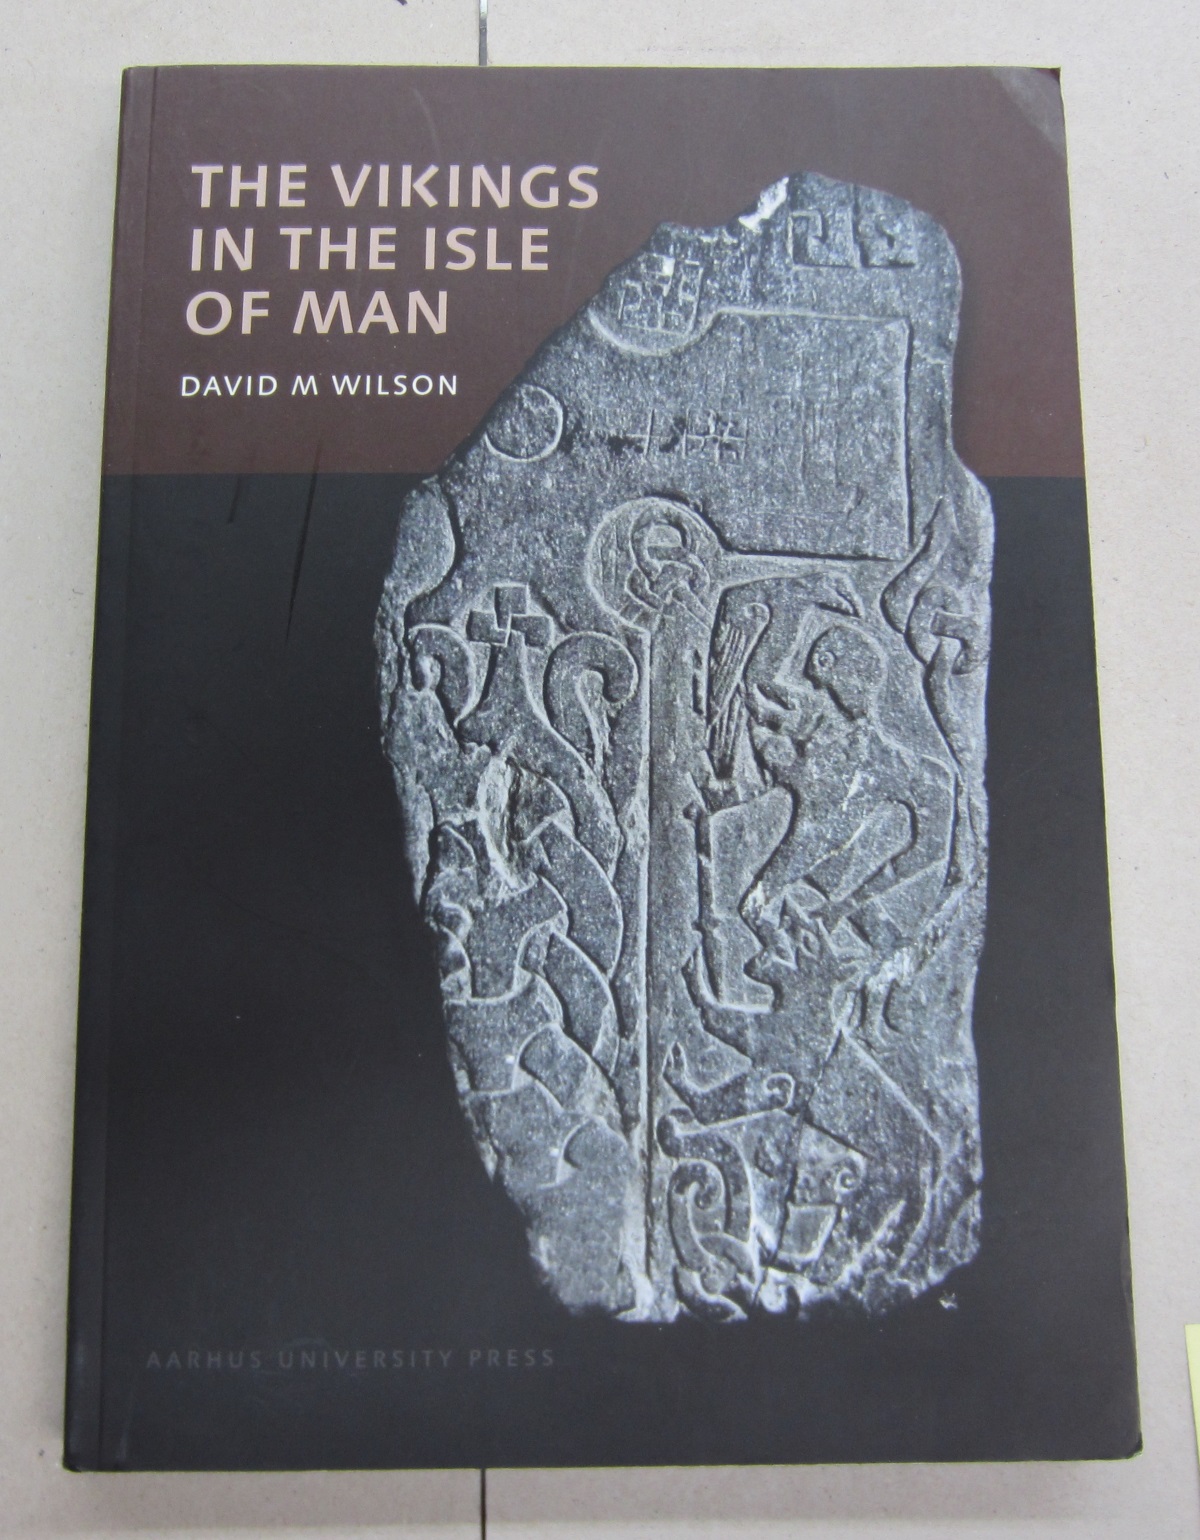 The Viking in the Isle of Man - David M. Wilson